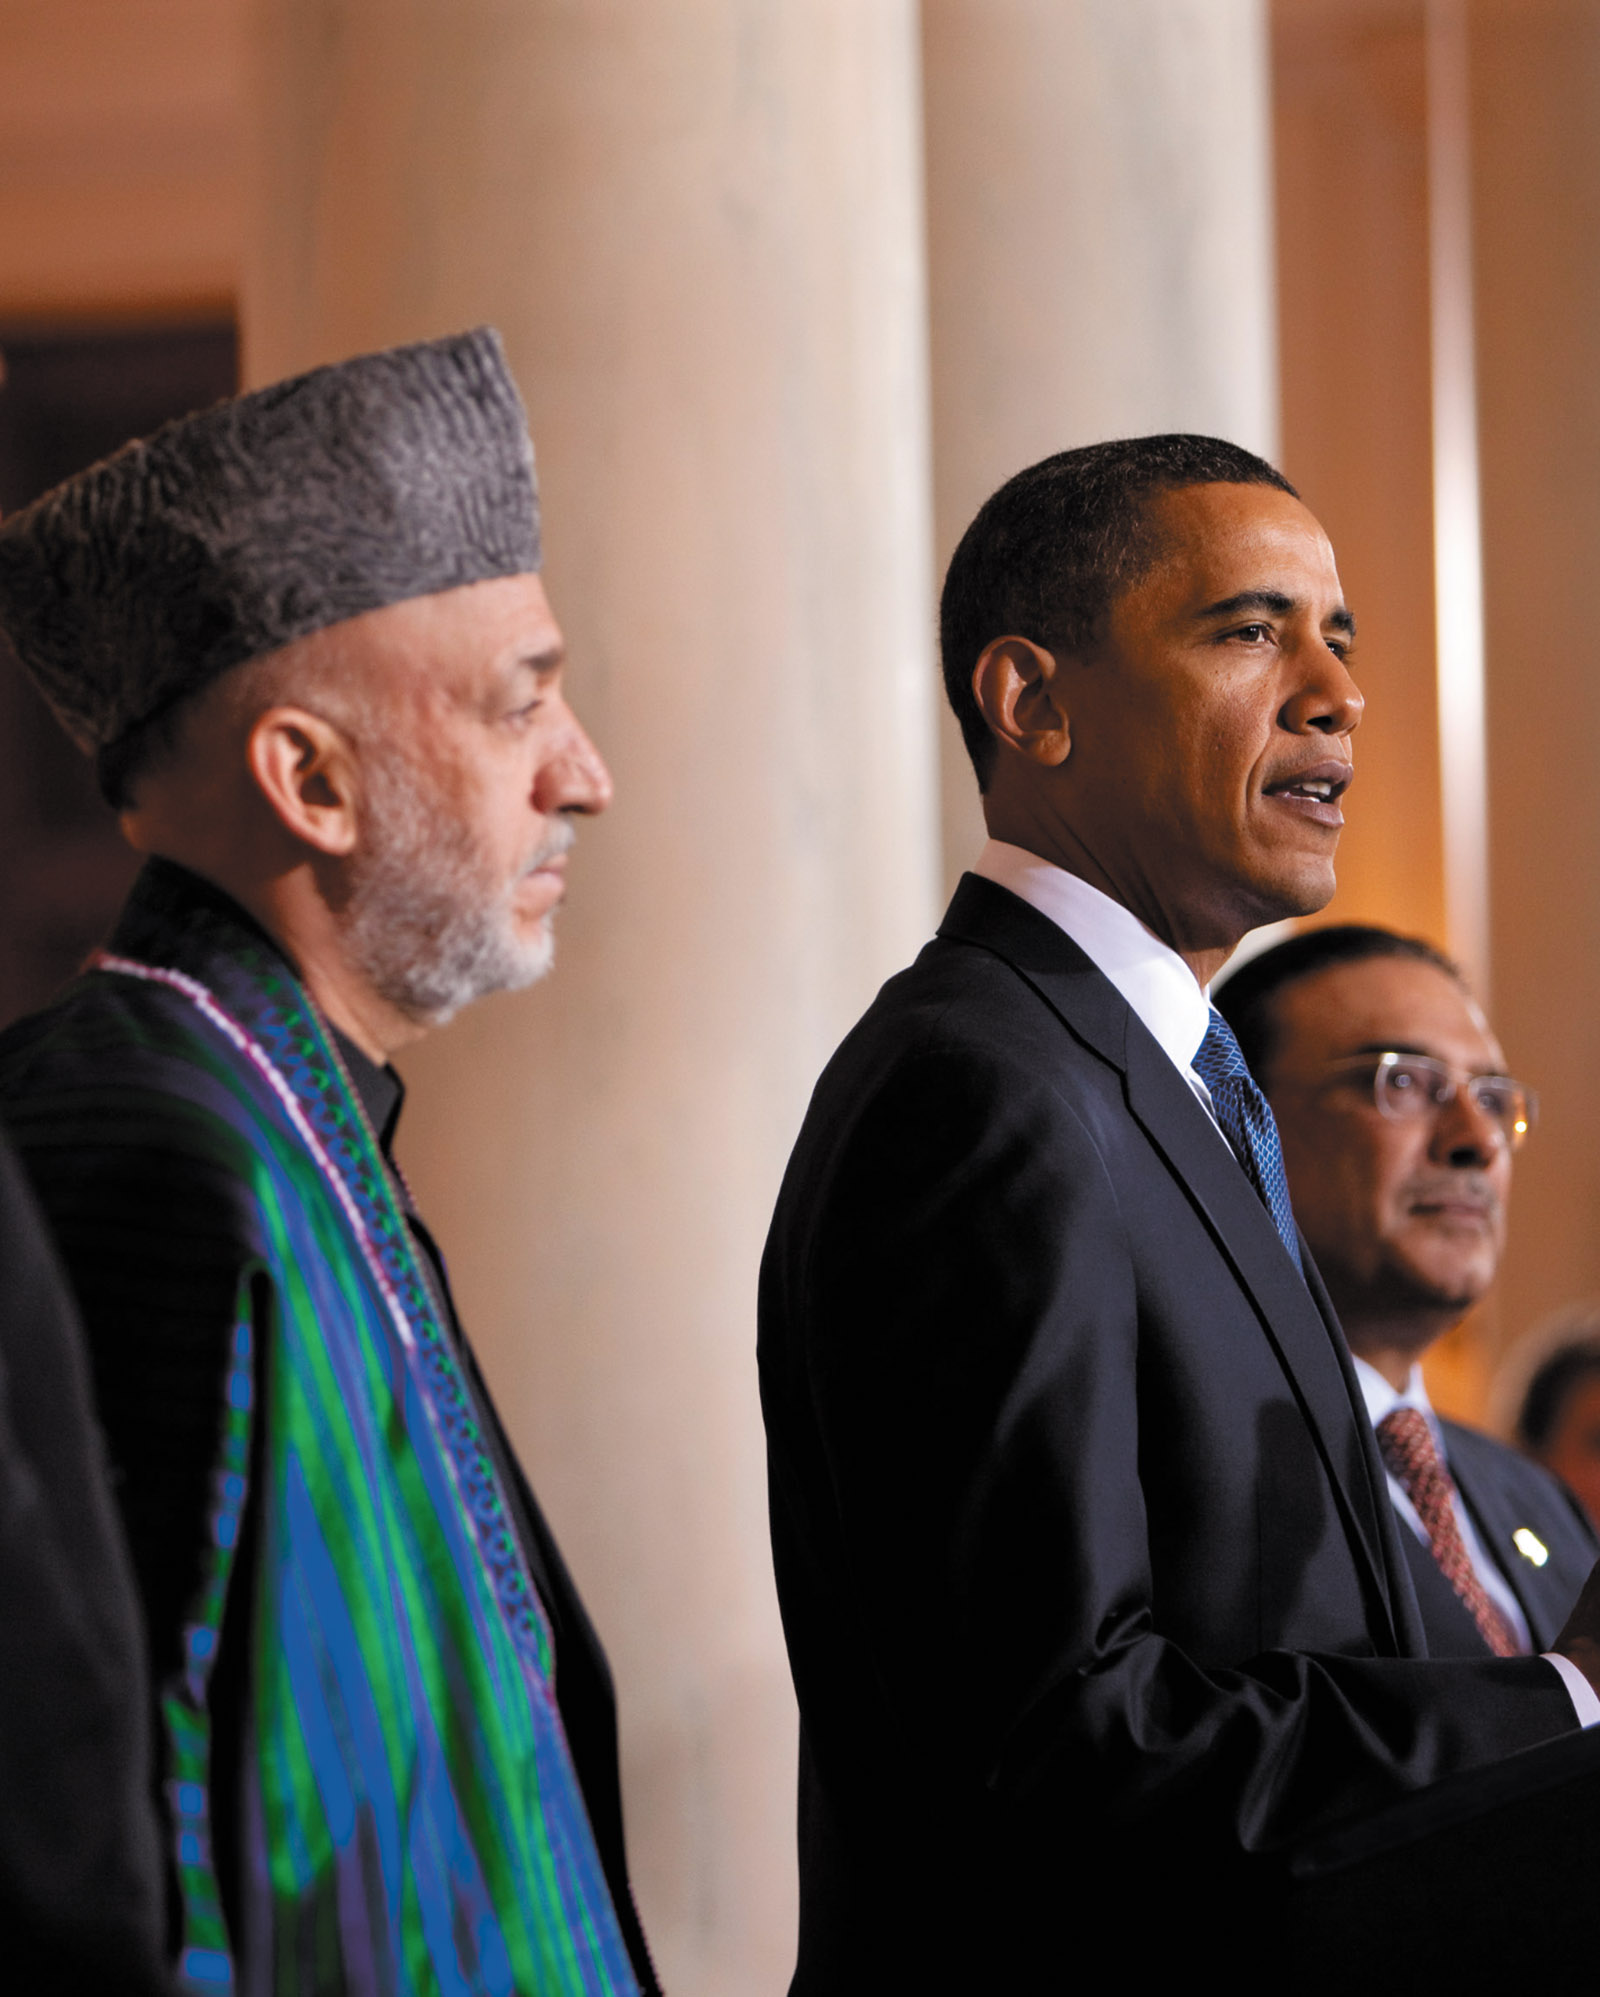 Hamid Karzai and Barack Obama at the White House, May 2009